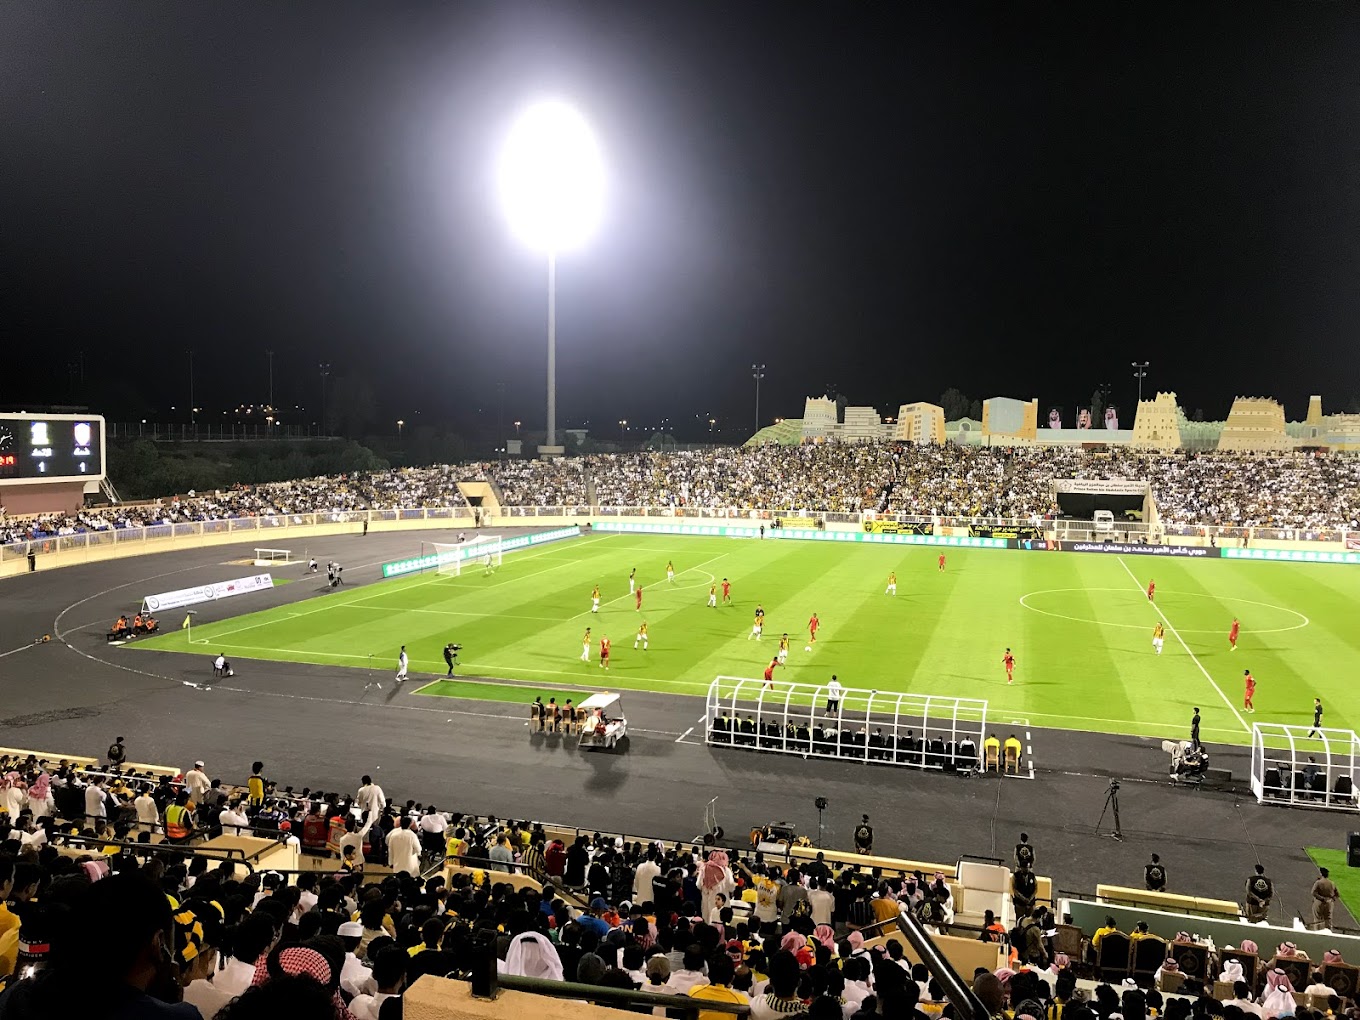 Palpite Damac x Al-Ittihad - Campeonato Saudita - 07/12